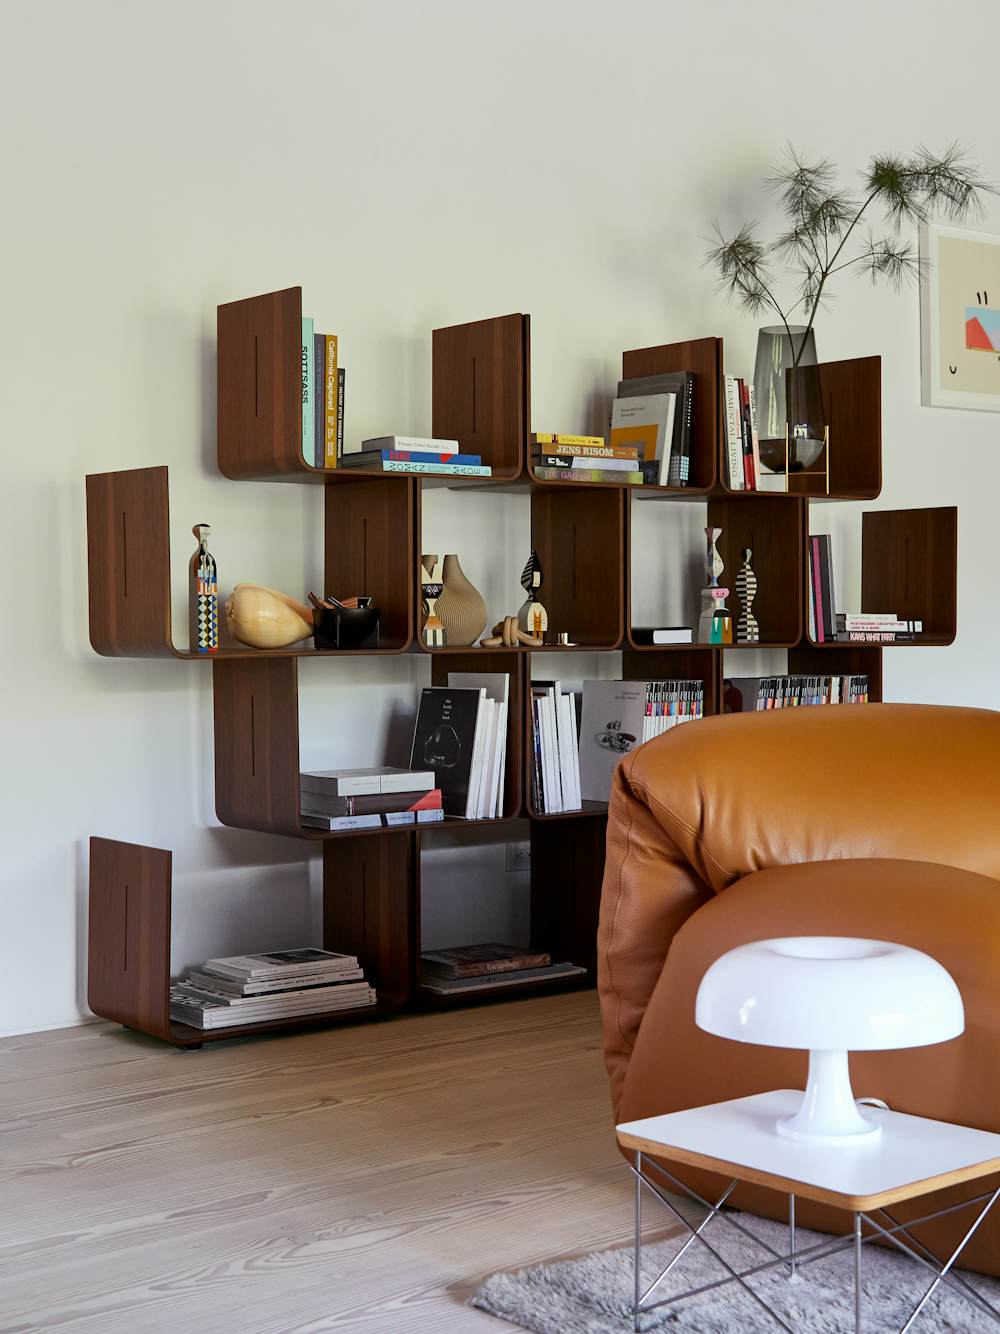 Elysee Bookshelf, Luva Sofa and Nessino Table Lamp